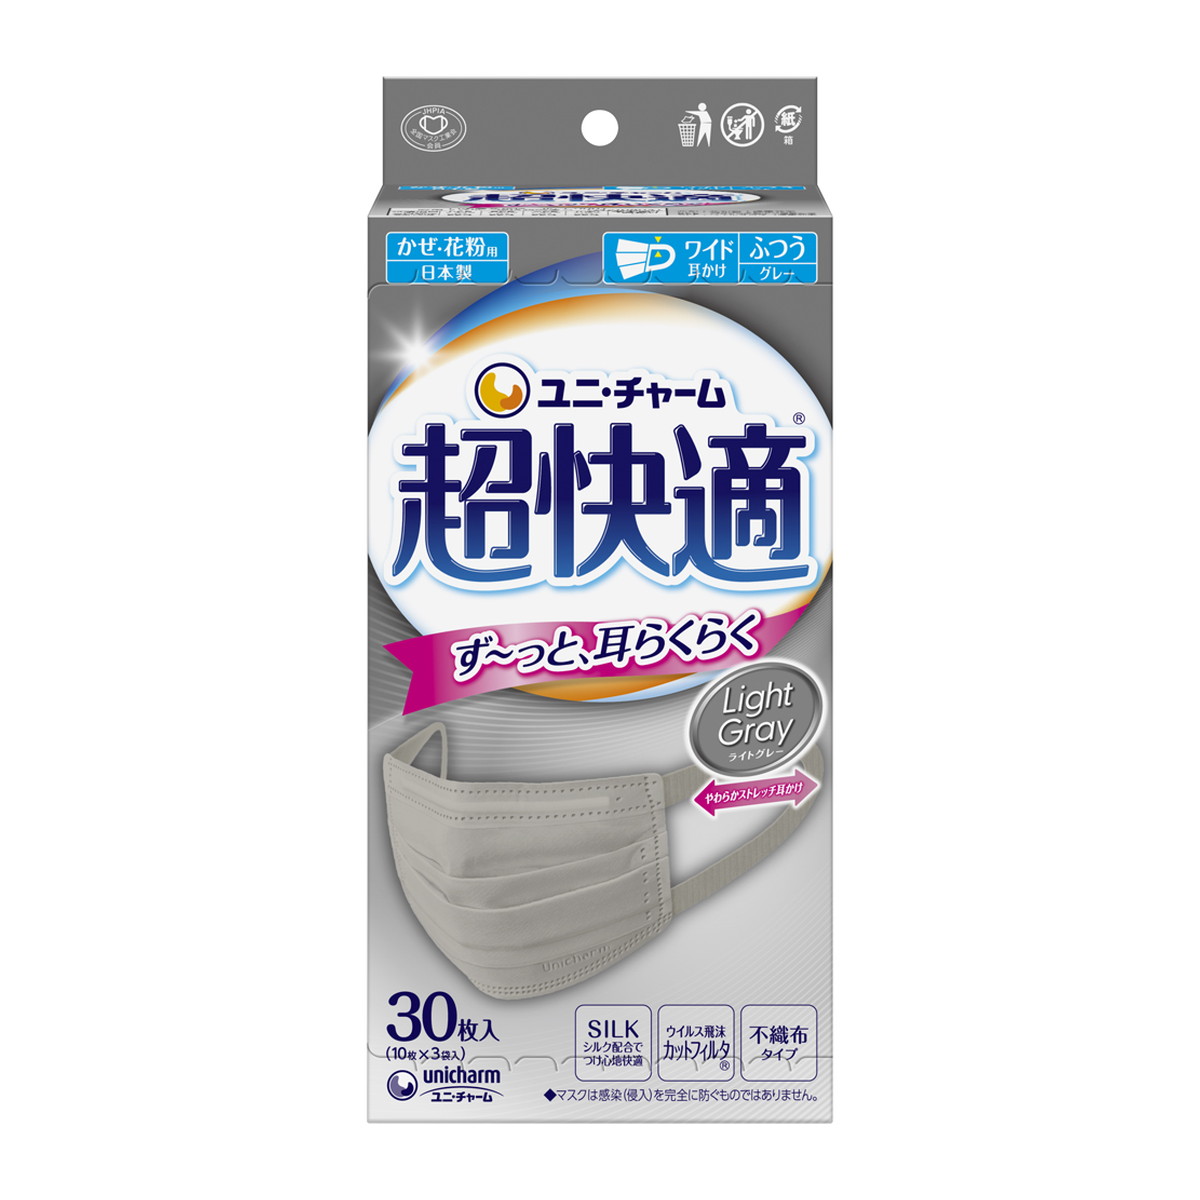 unicharm Uni -Charm超舒適面膜百褶型灰色通常30件